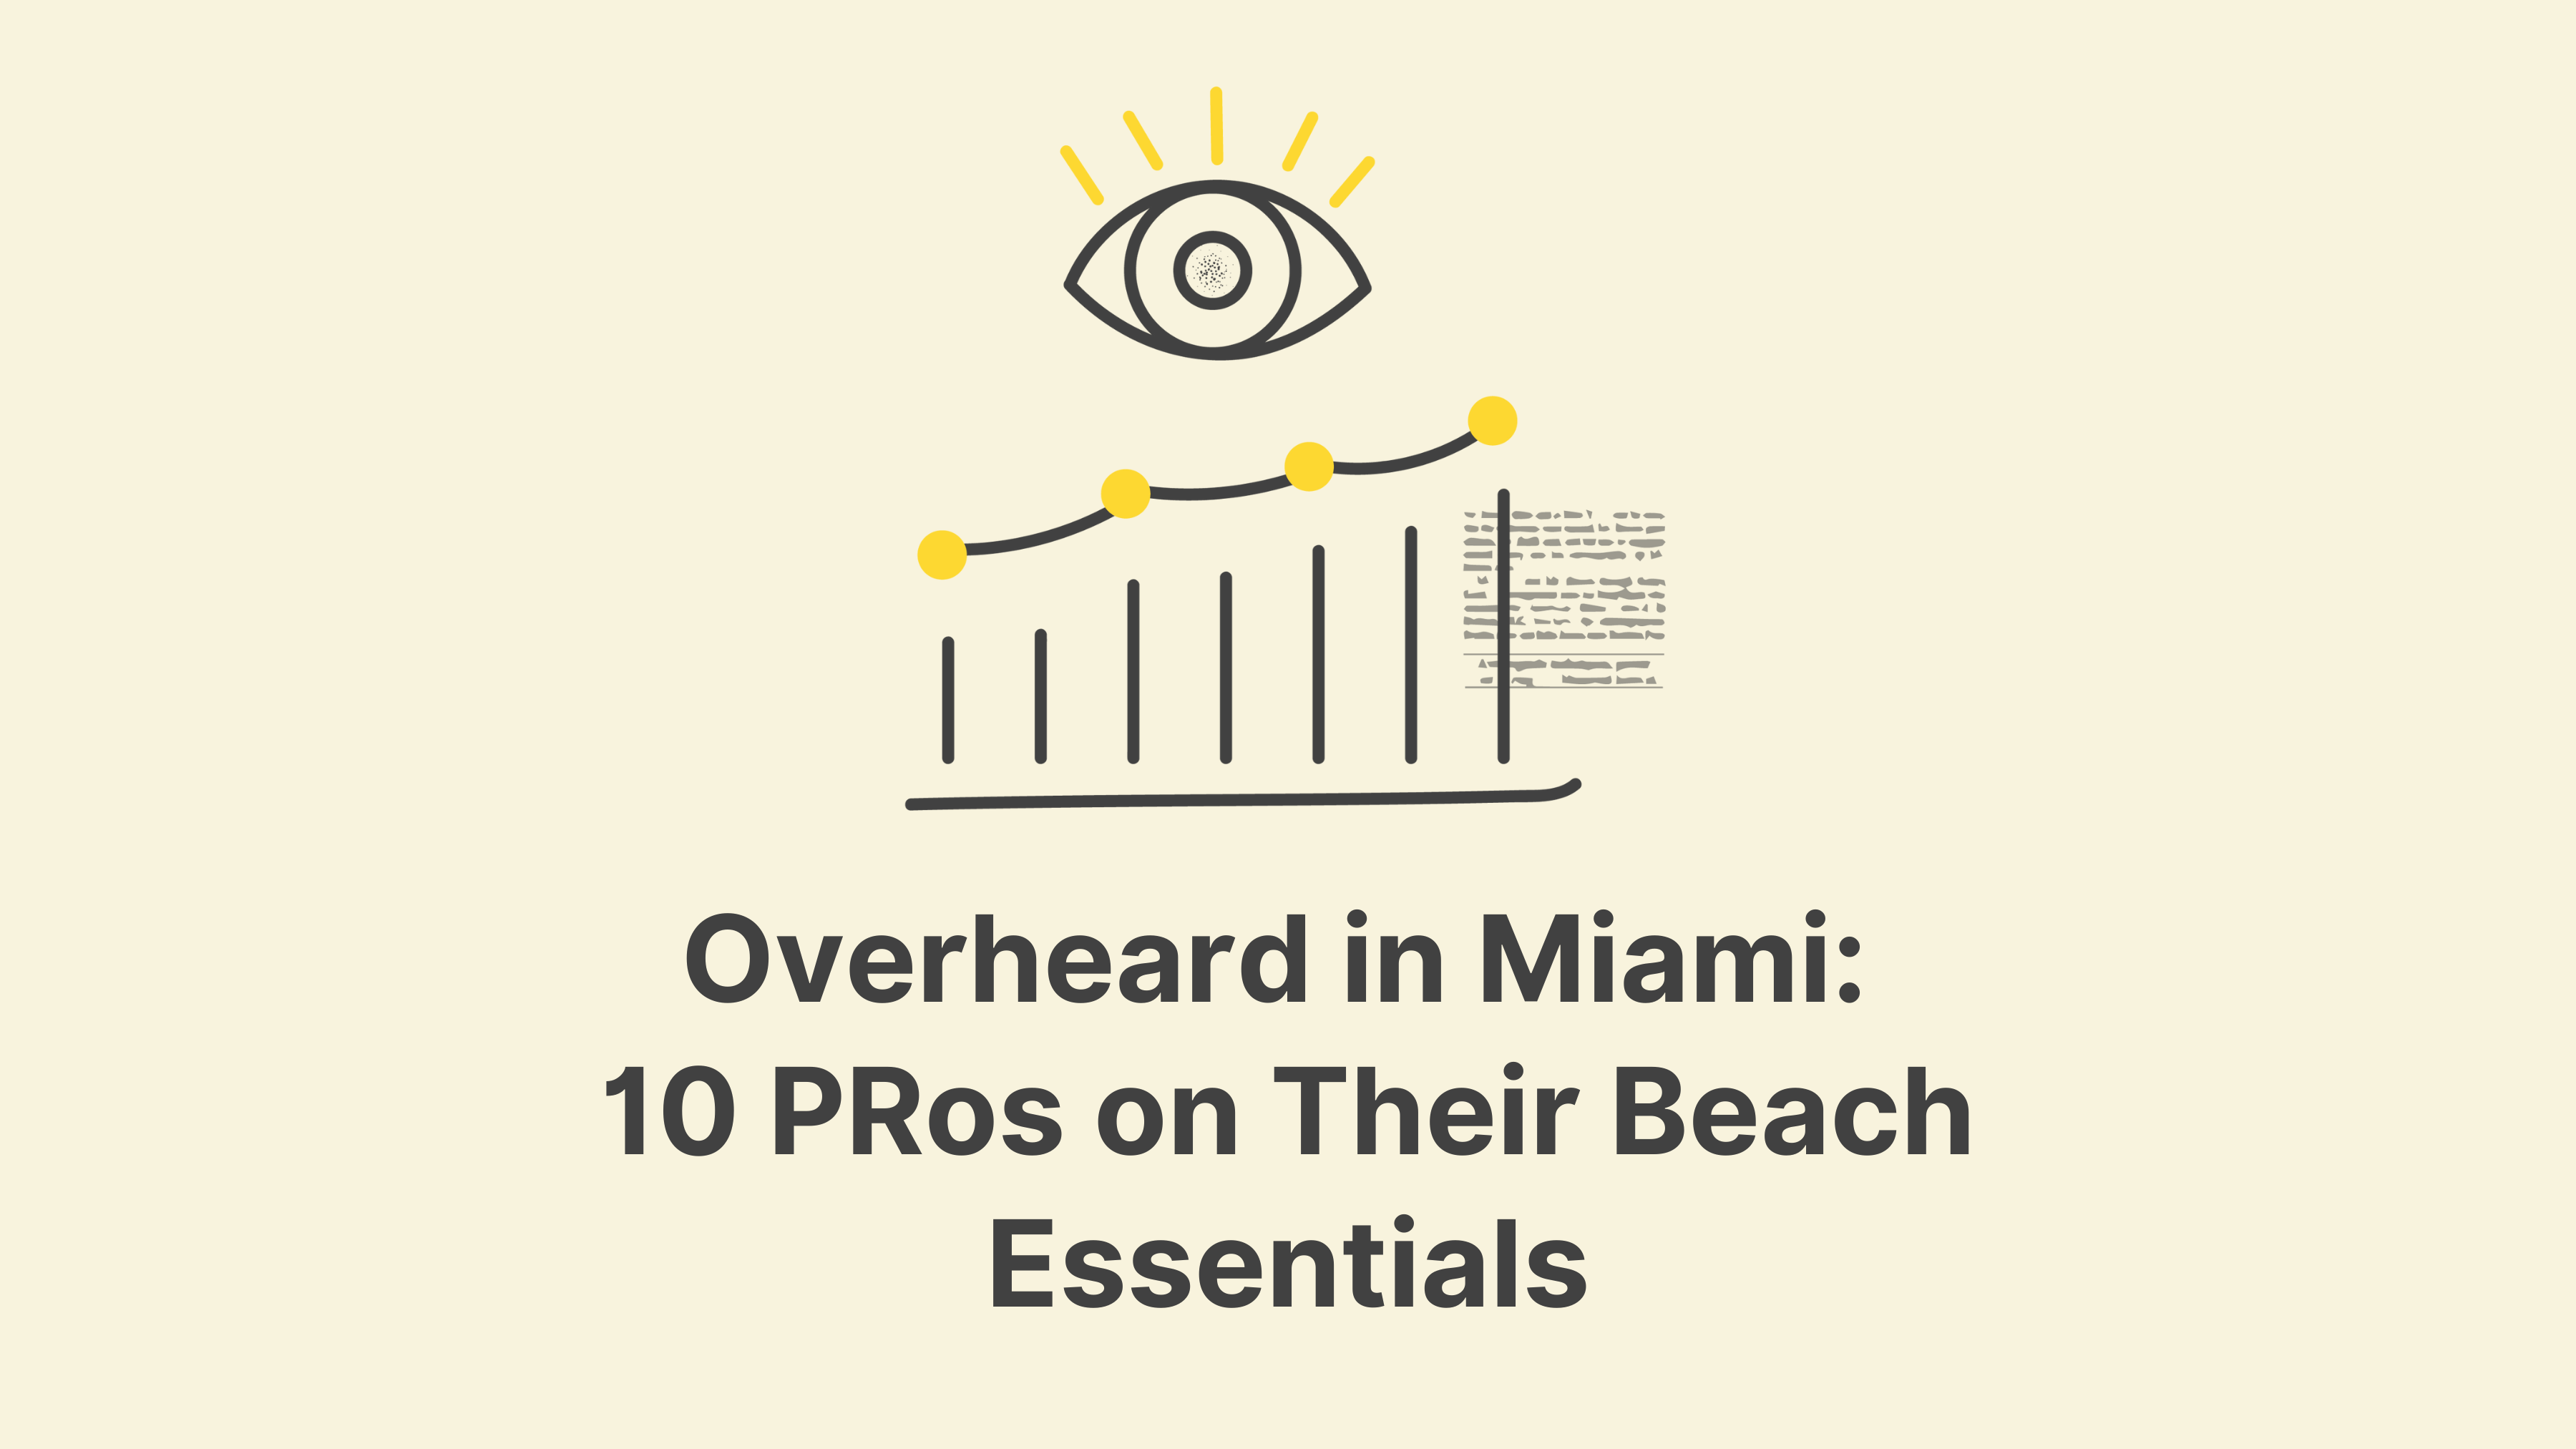 Overheard in Miami: 10 PRos on Their Beach Essentials